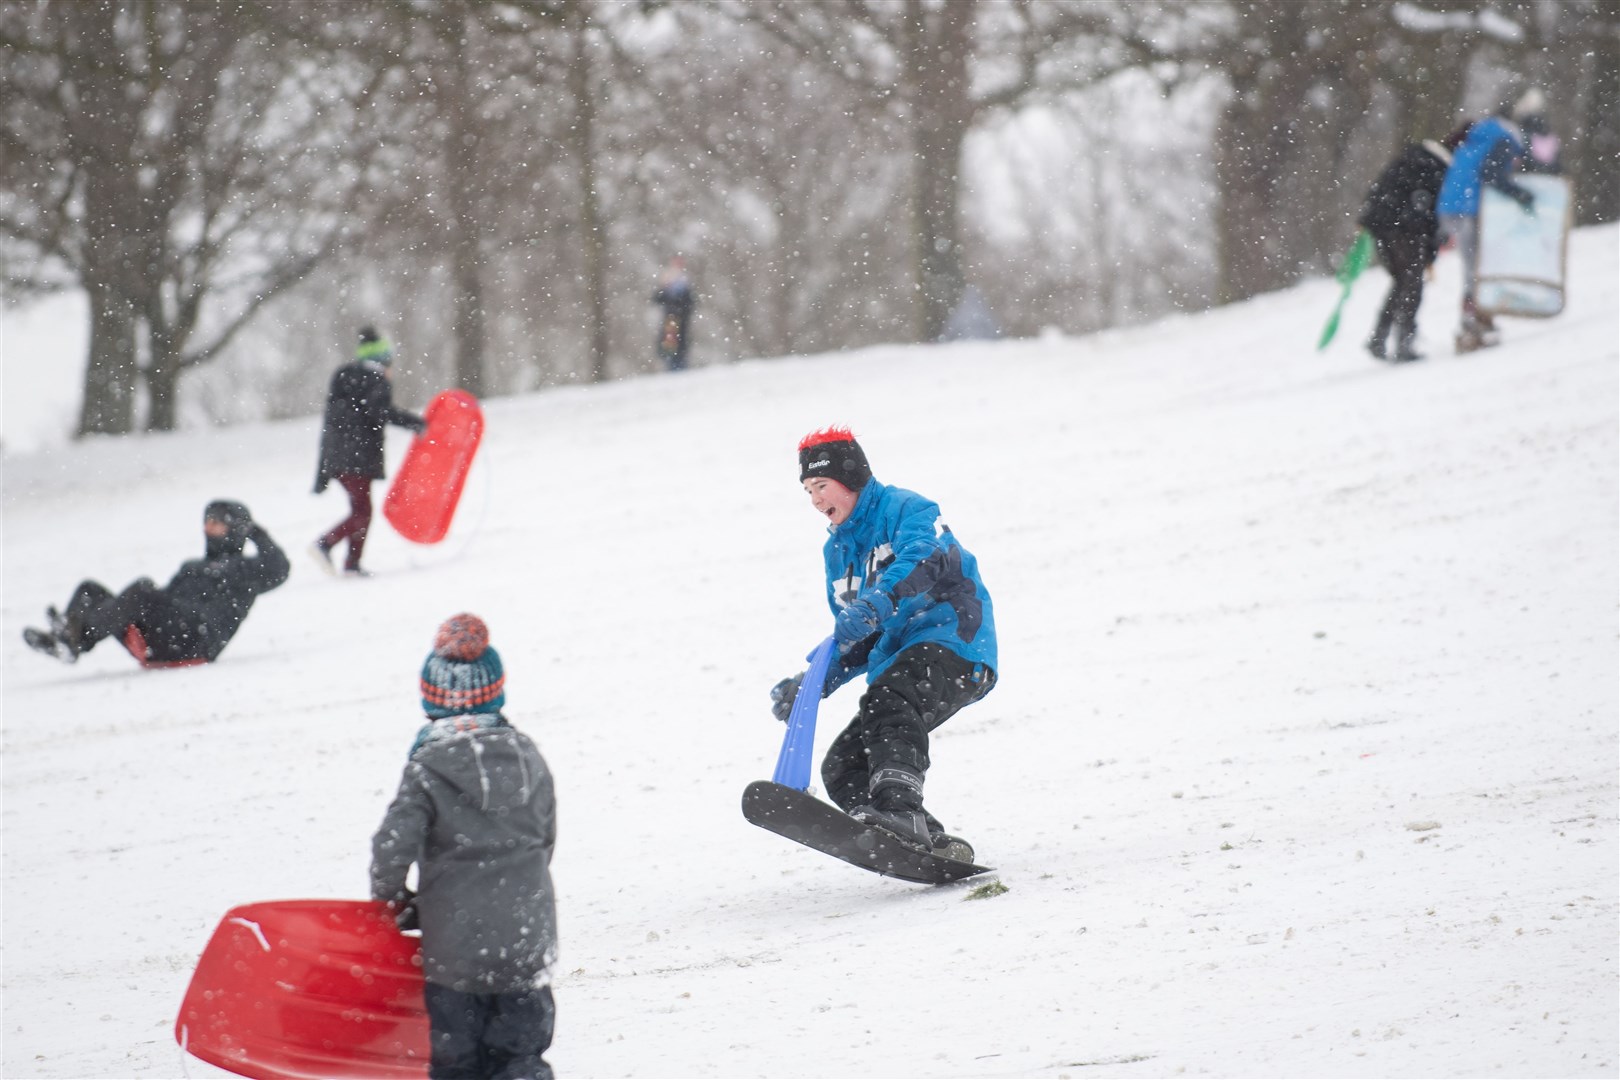 People enjoy the snow at Christchurch Park in Ipswich (Joe Giddens/PA)